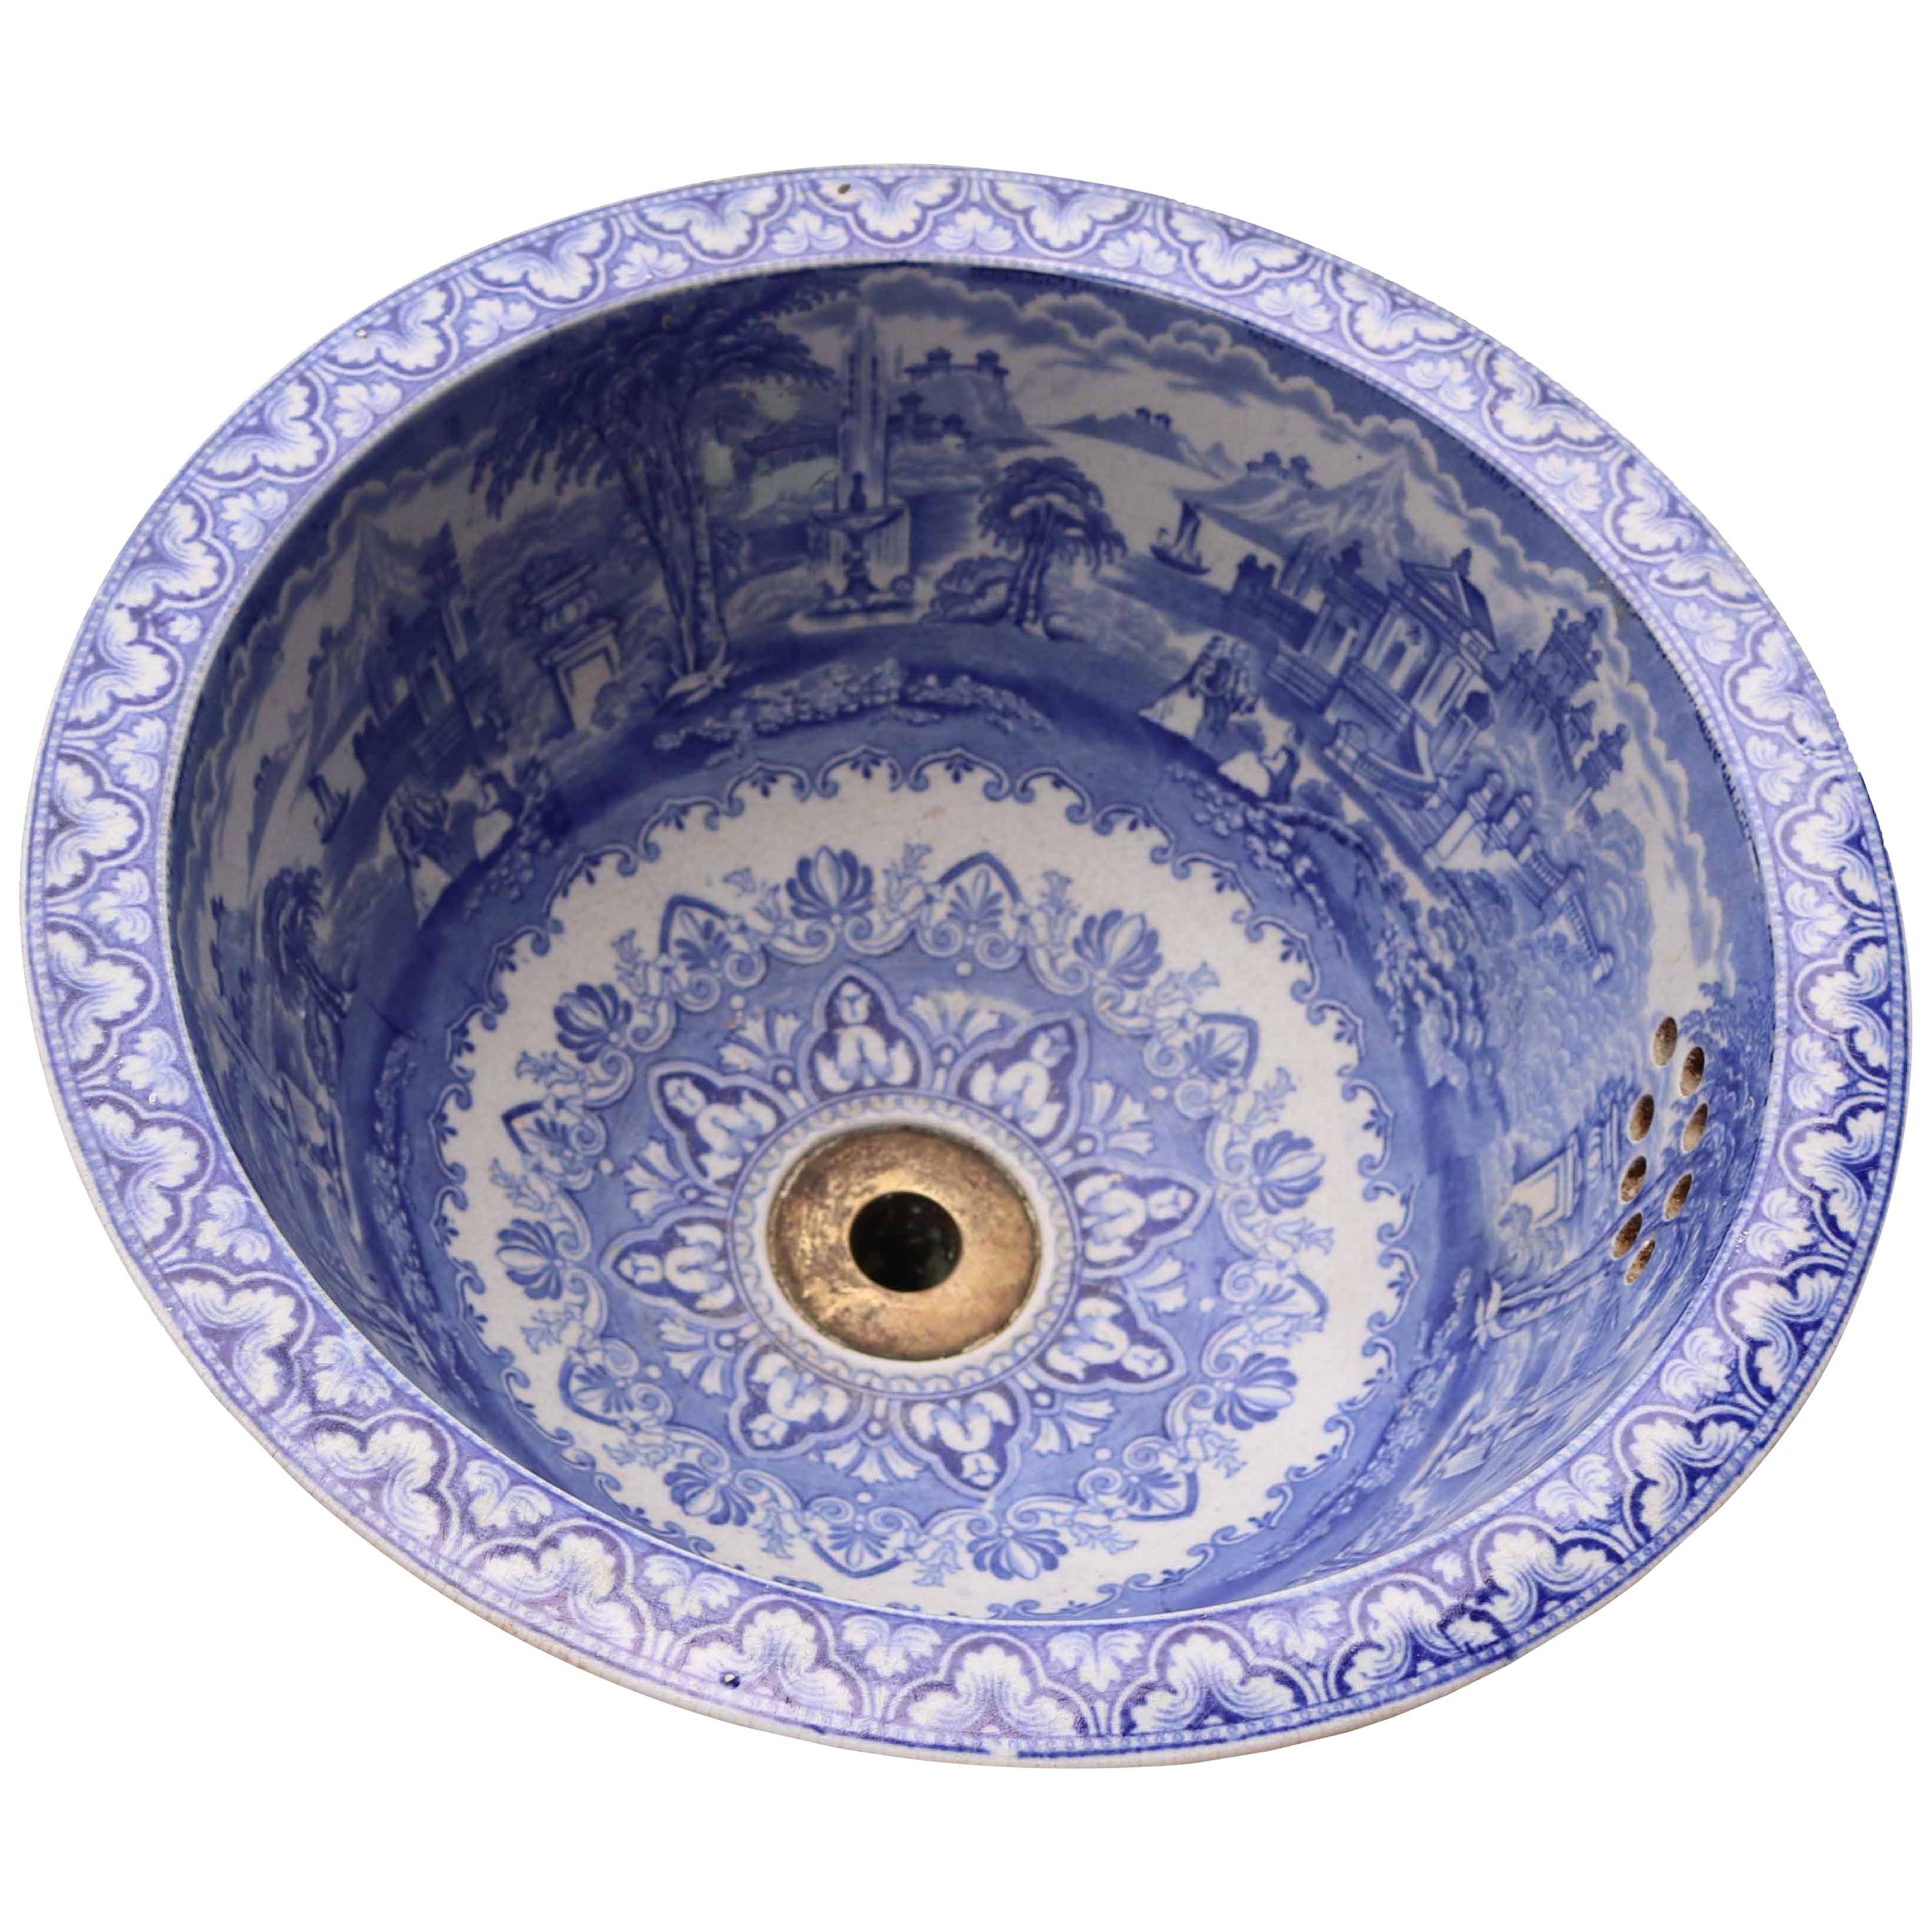 Antique Blue and White Transfer Printed Porcelain Wash Basin